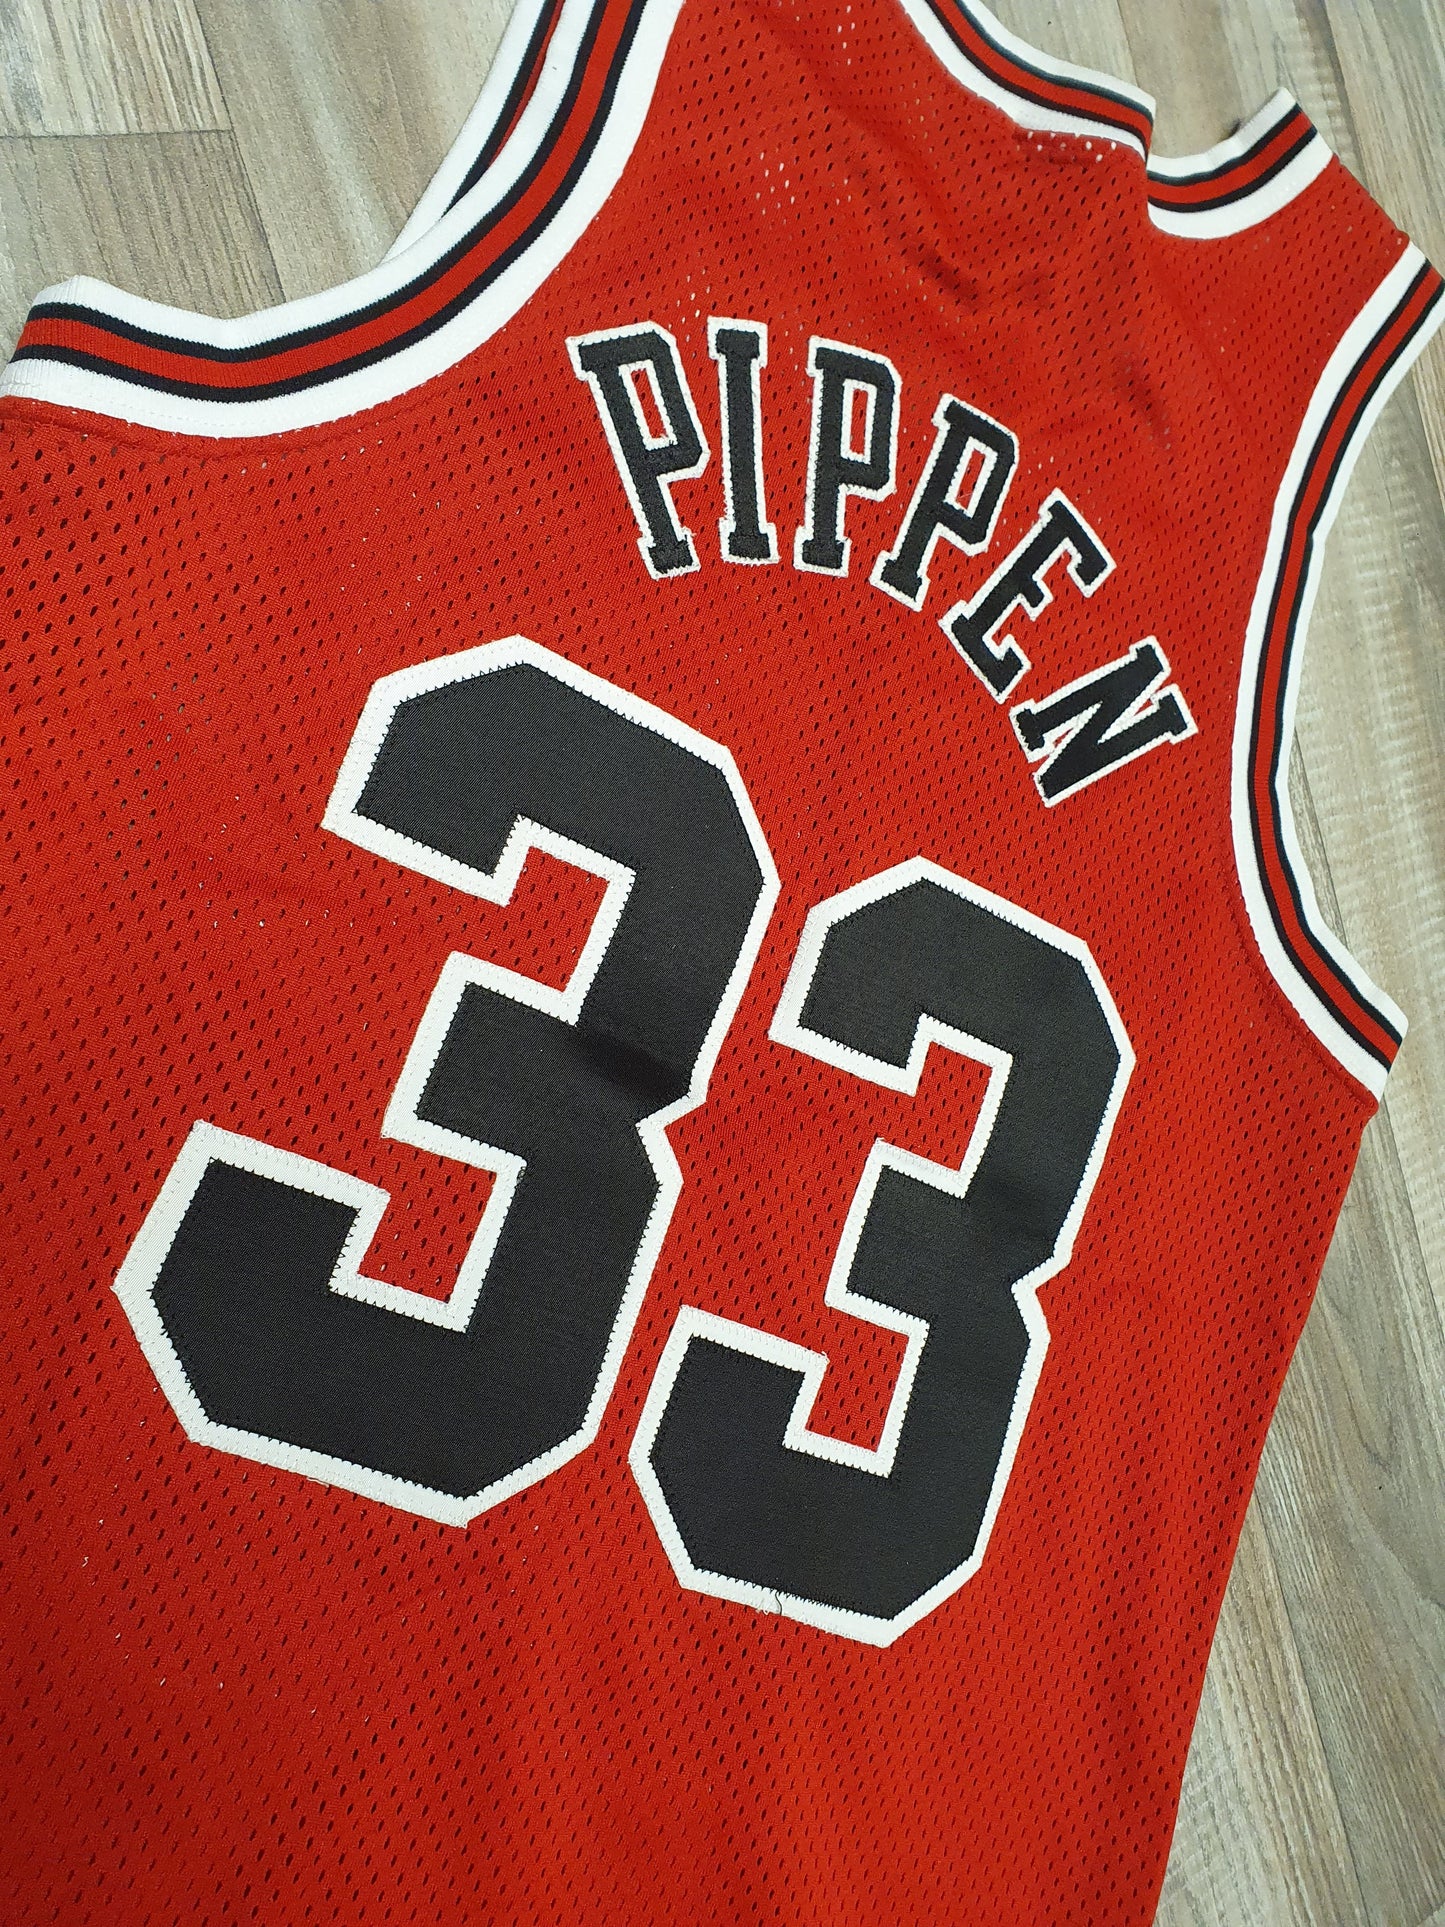 Scottie Pippen Chicago Bulls Jersey Size Small